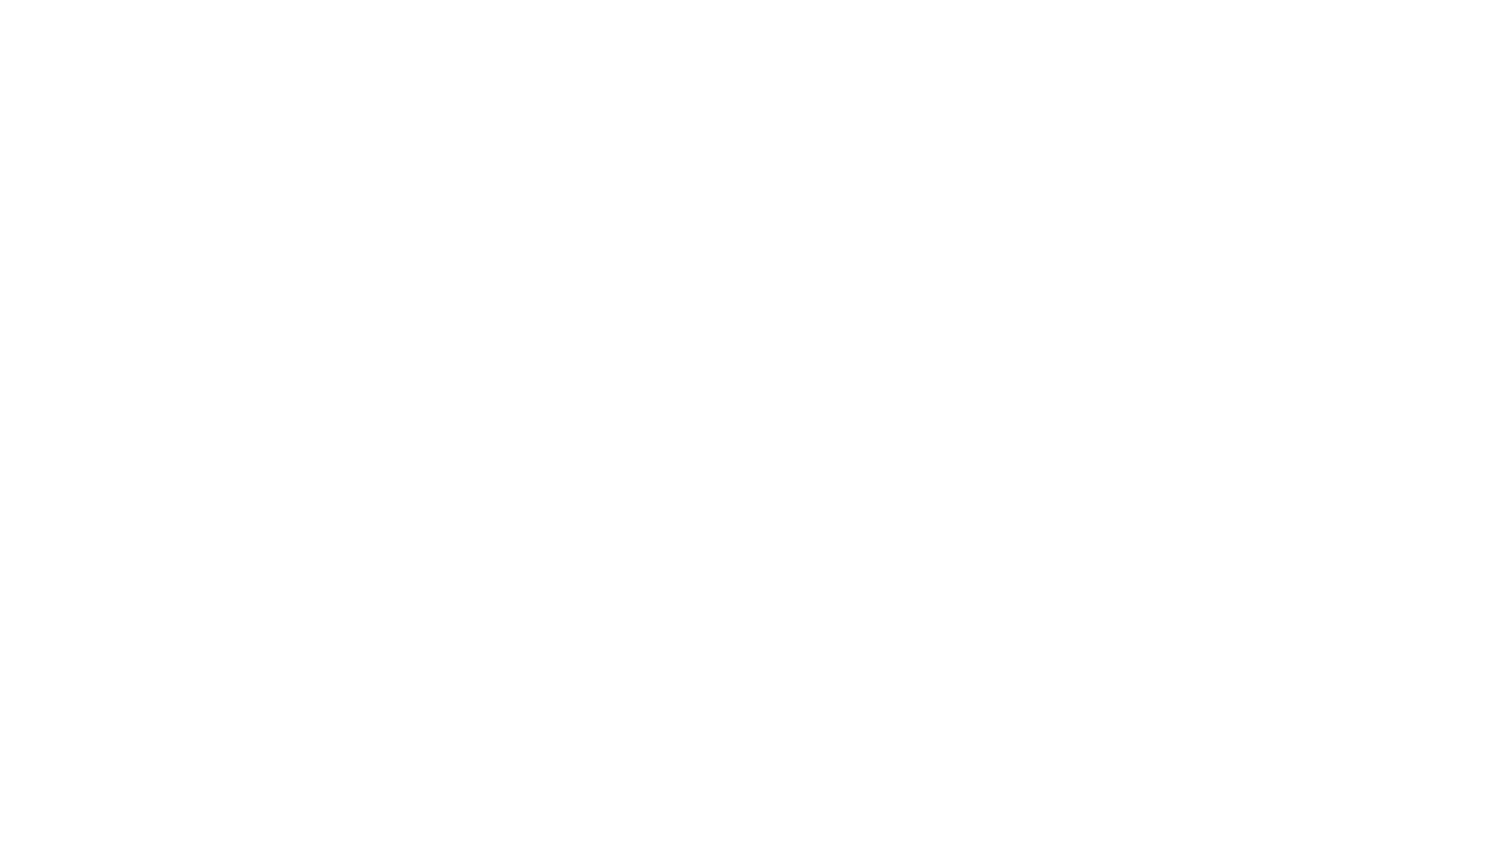 Pennyroyal Arts Council